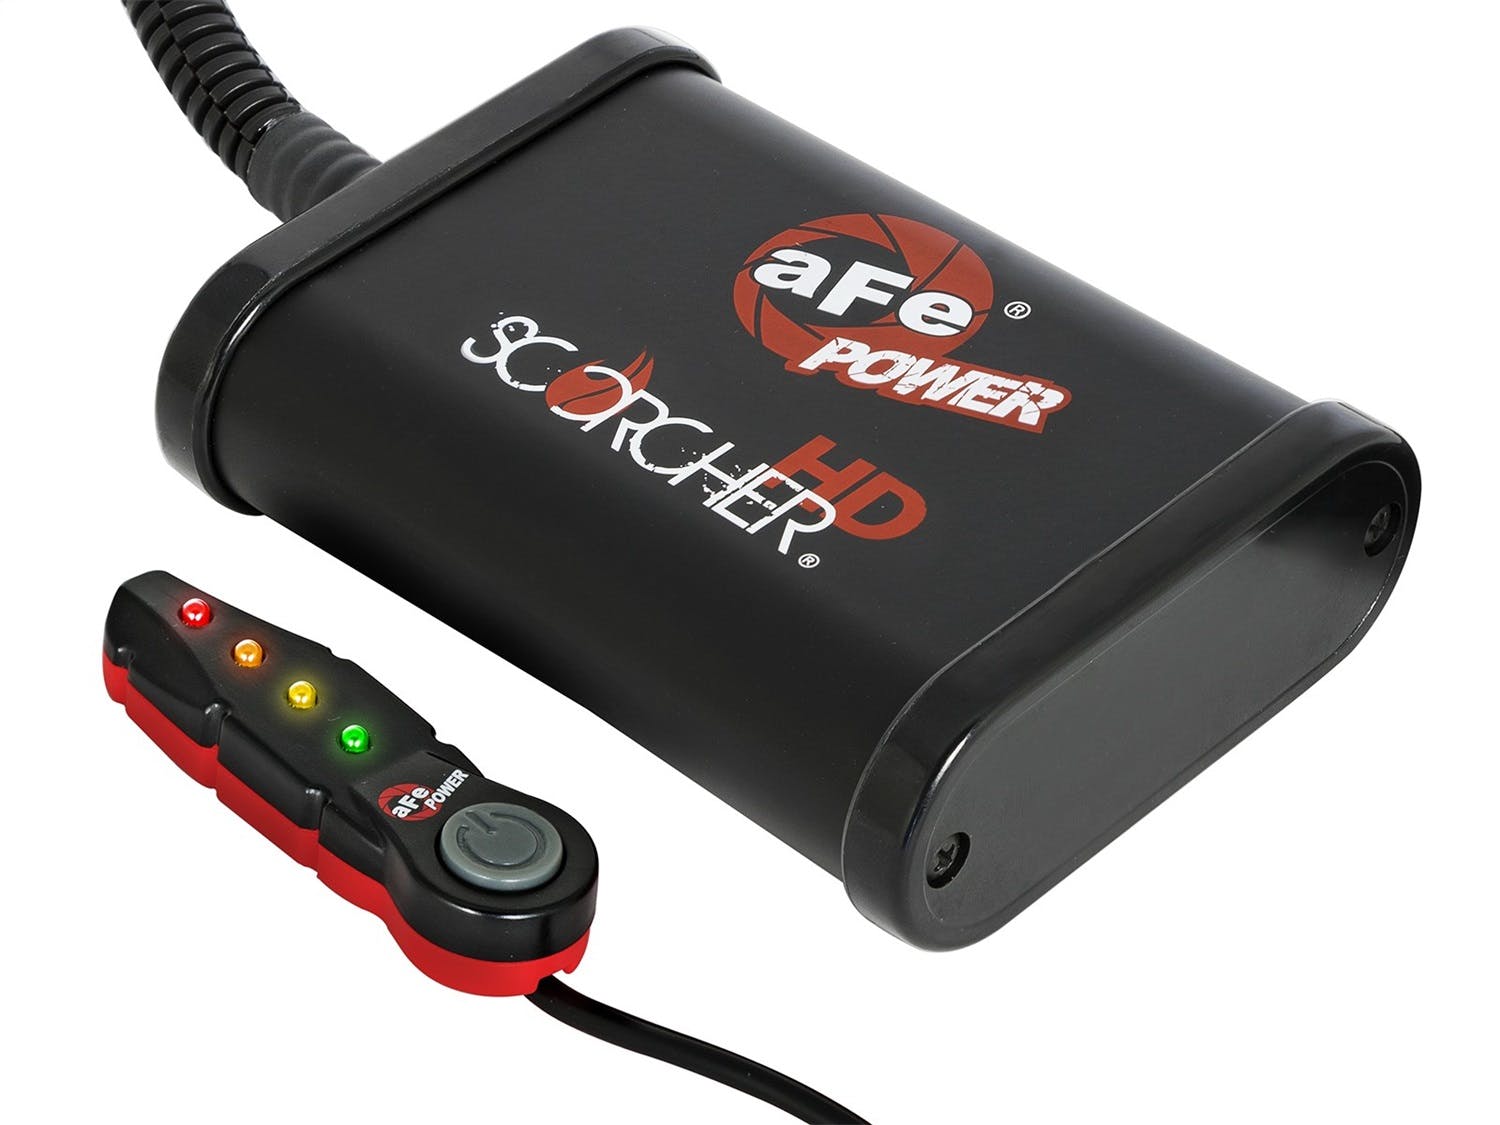 AFE 77-44009-PK SCORCHER HD Power Package